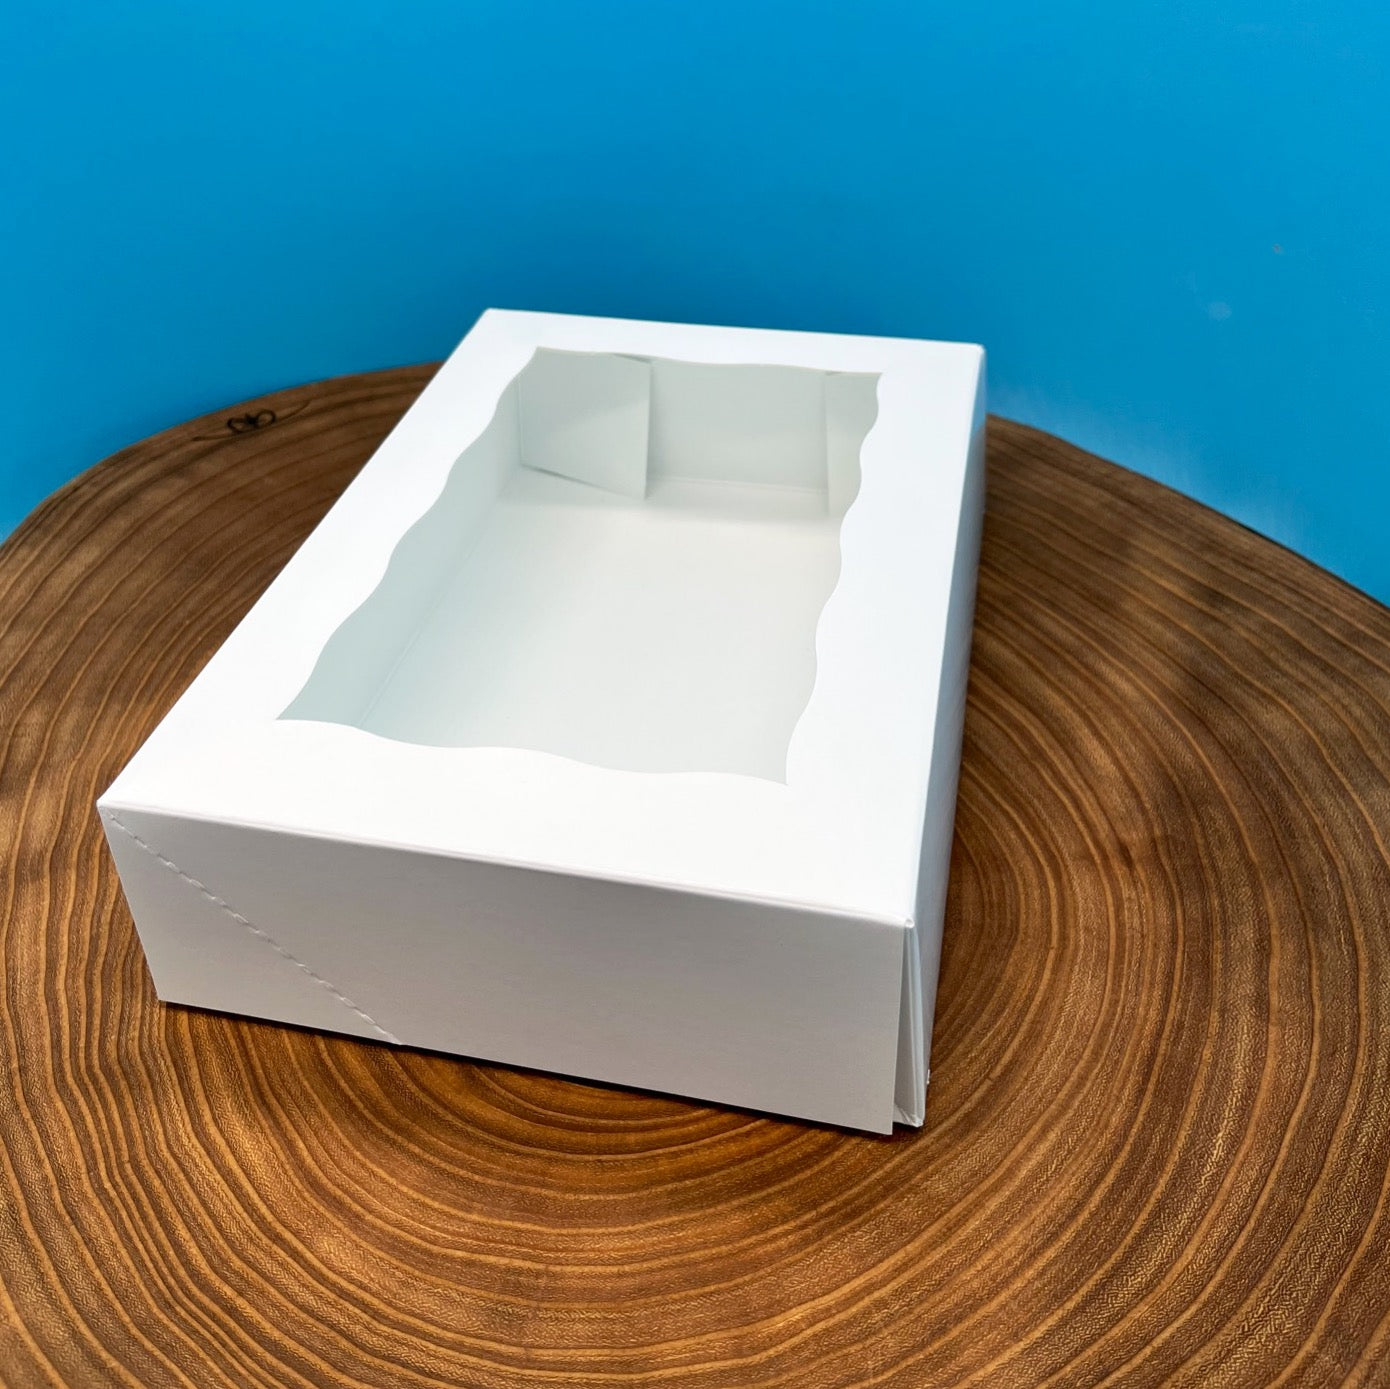 10x7x2.5 White Pastry Box With Window - Prefolded